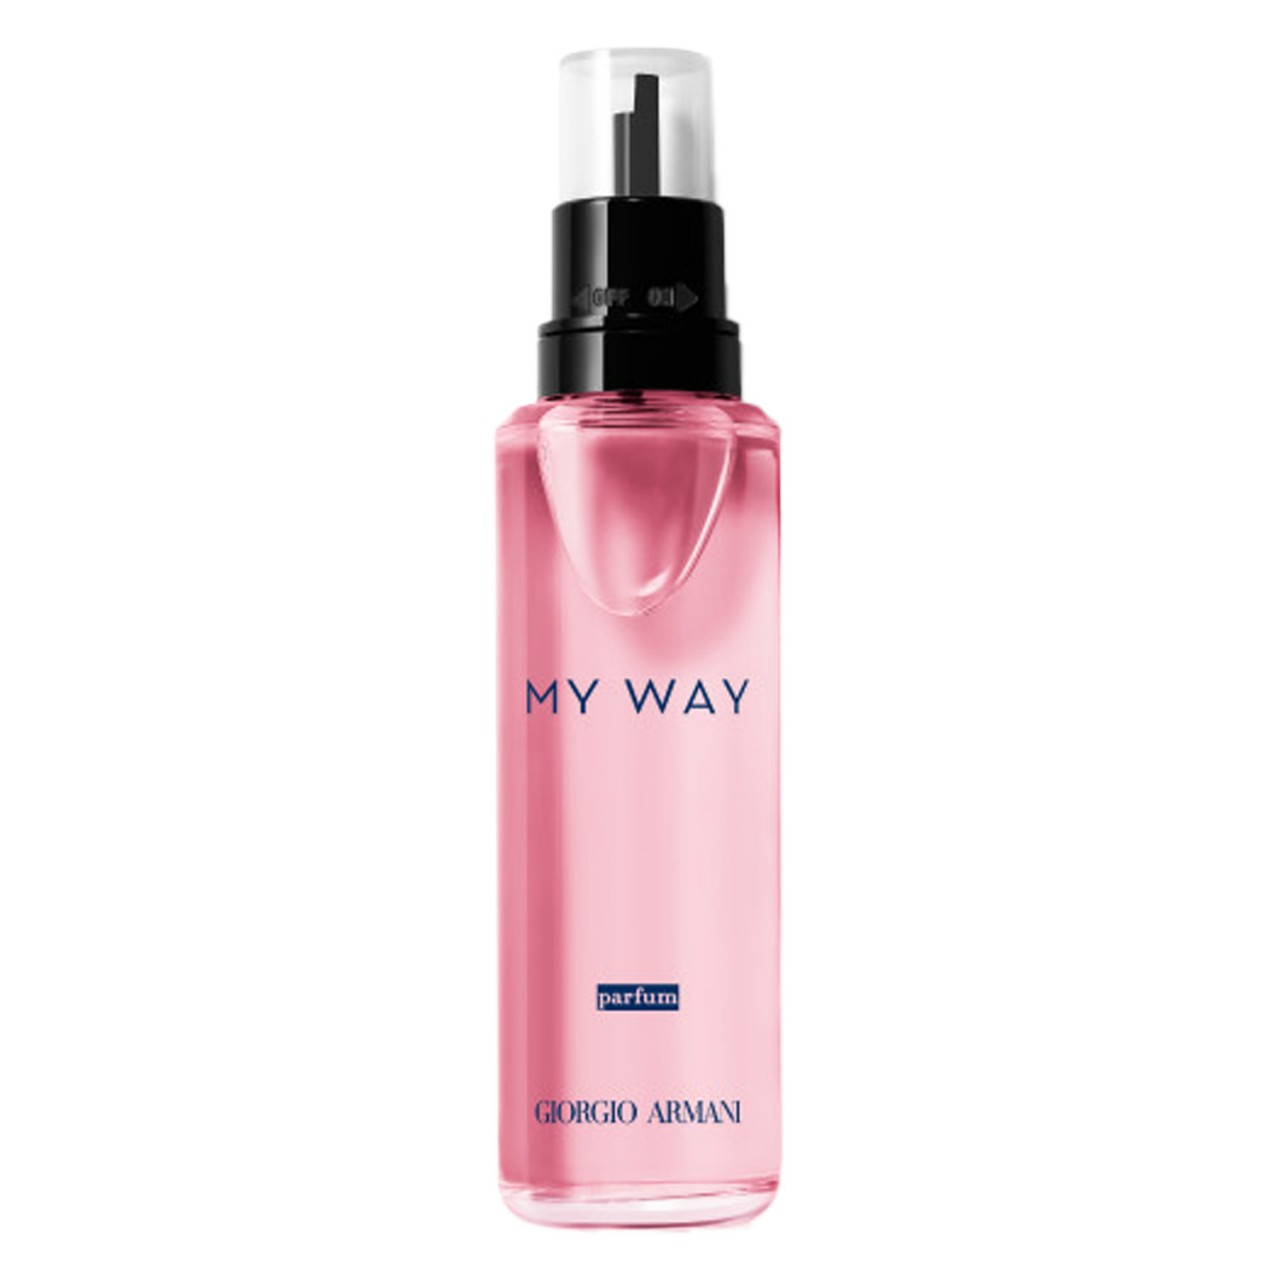 MY WAY - Parfum Refill von Giorgio Armani